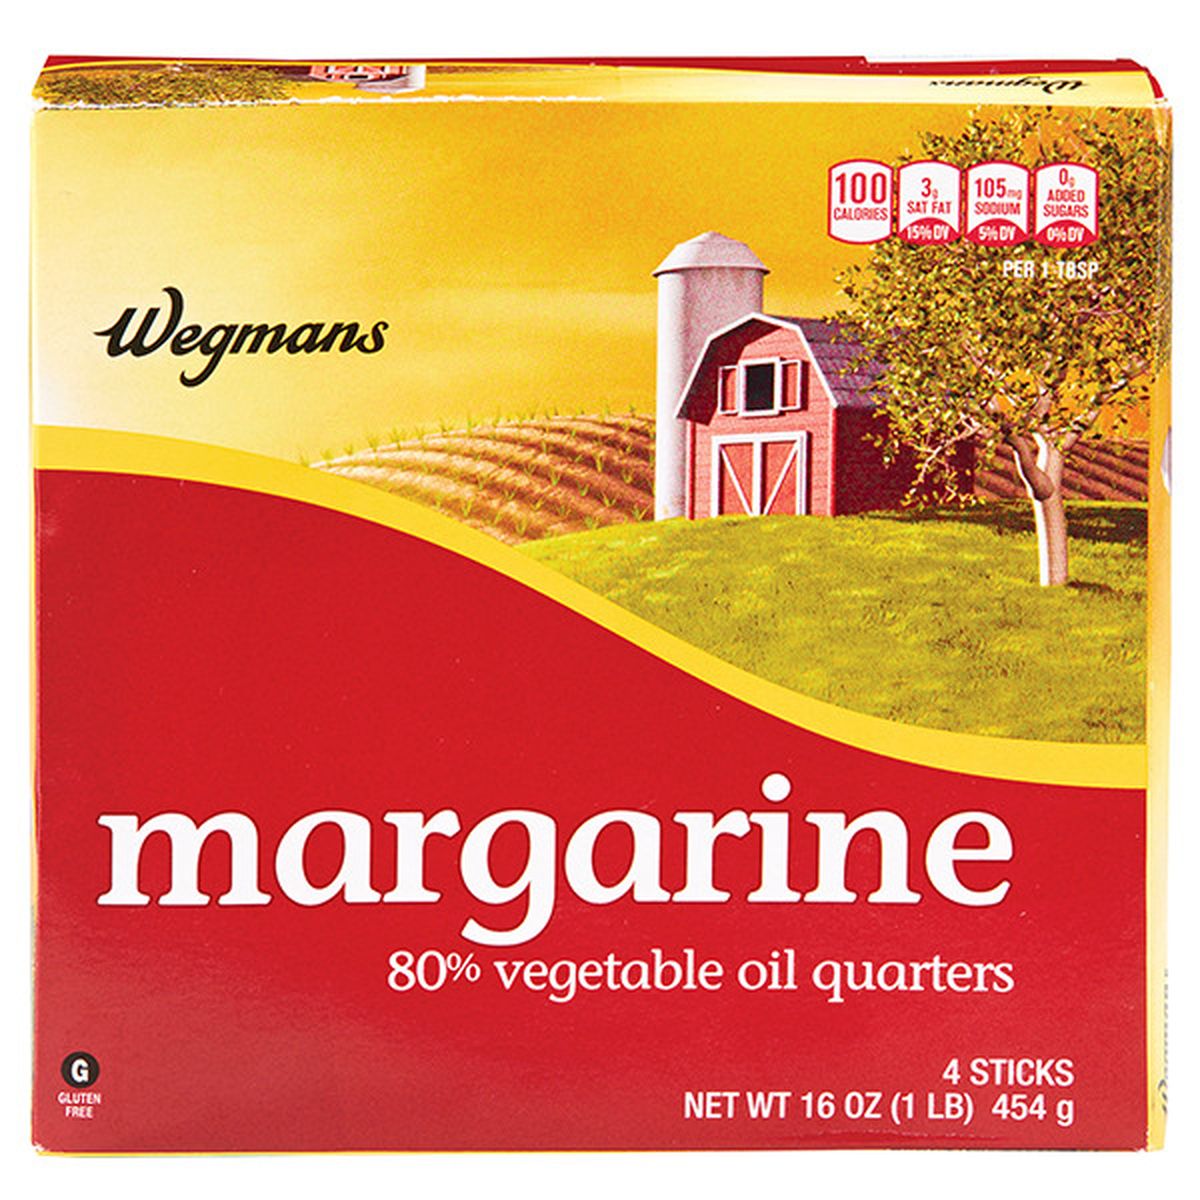 Calories in Wegmans Margarine 80% Vegetable Oil Quarters, 4 Sticks